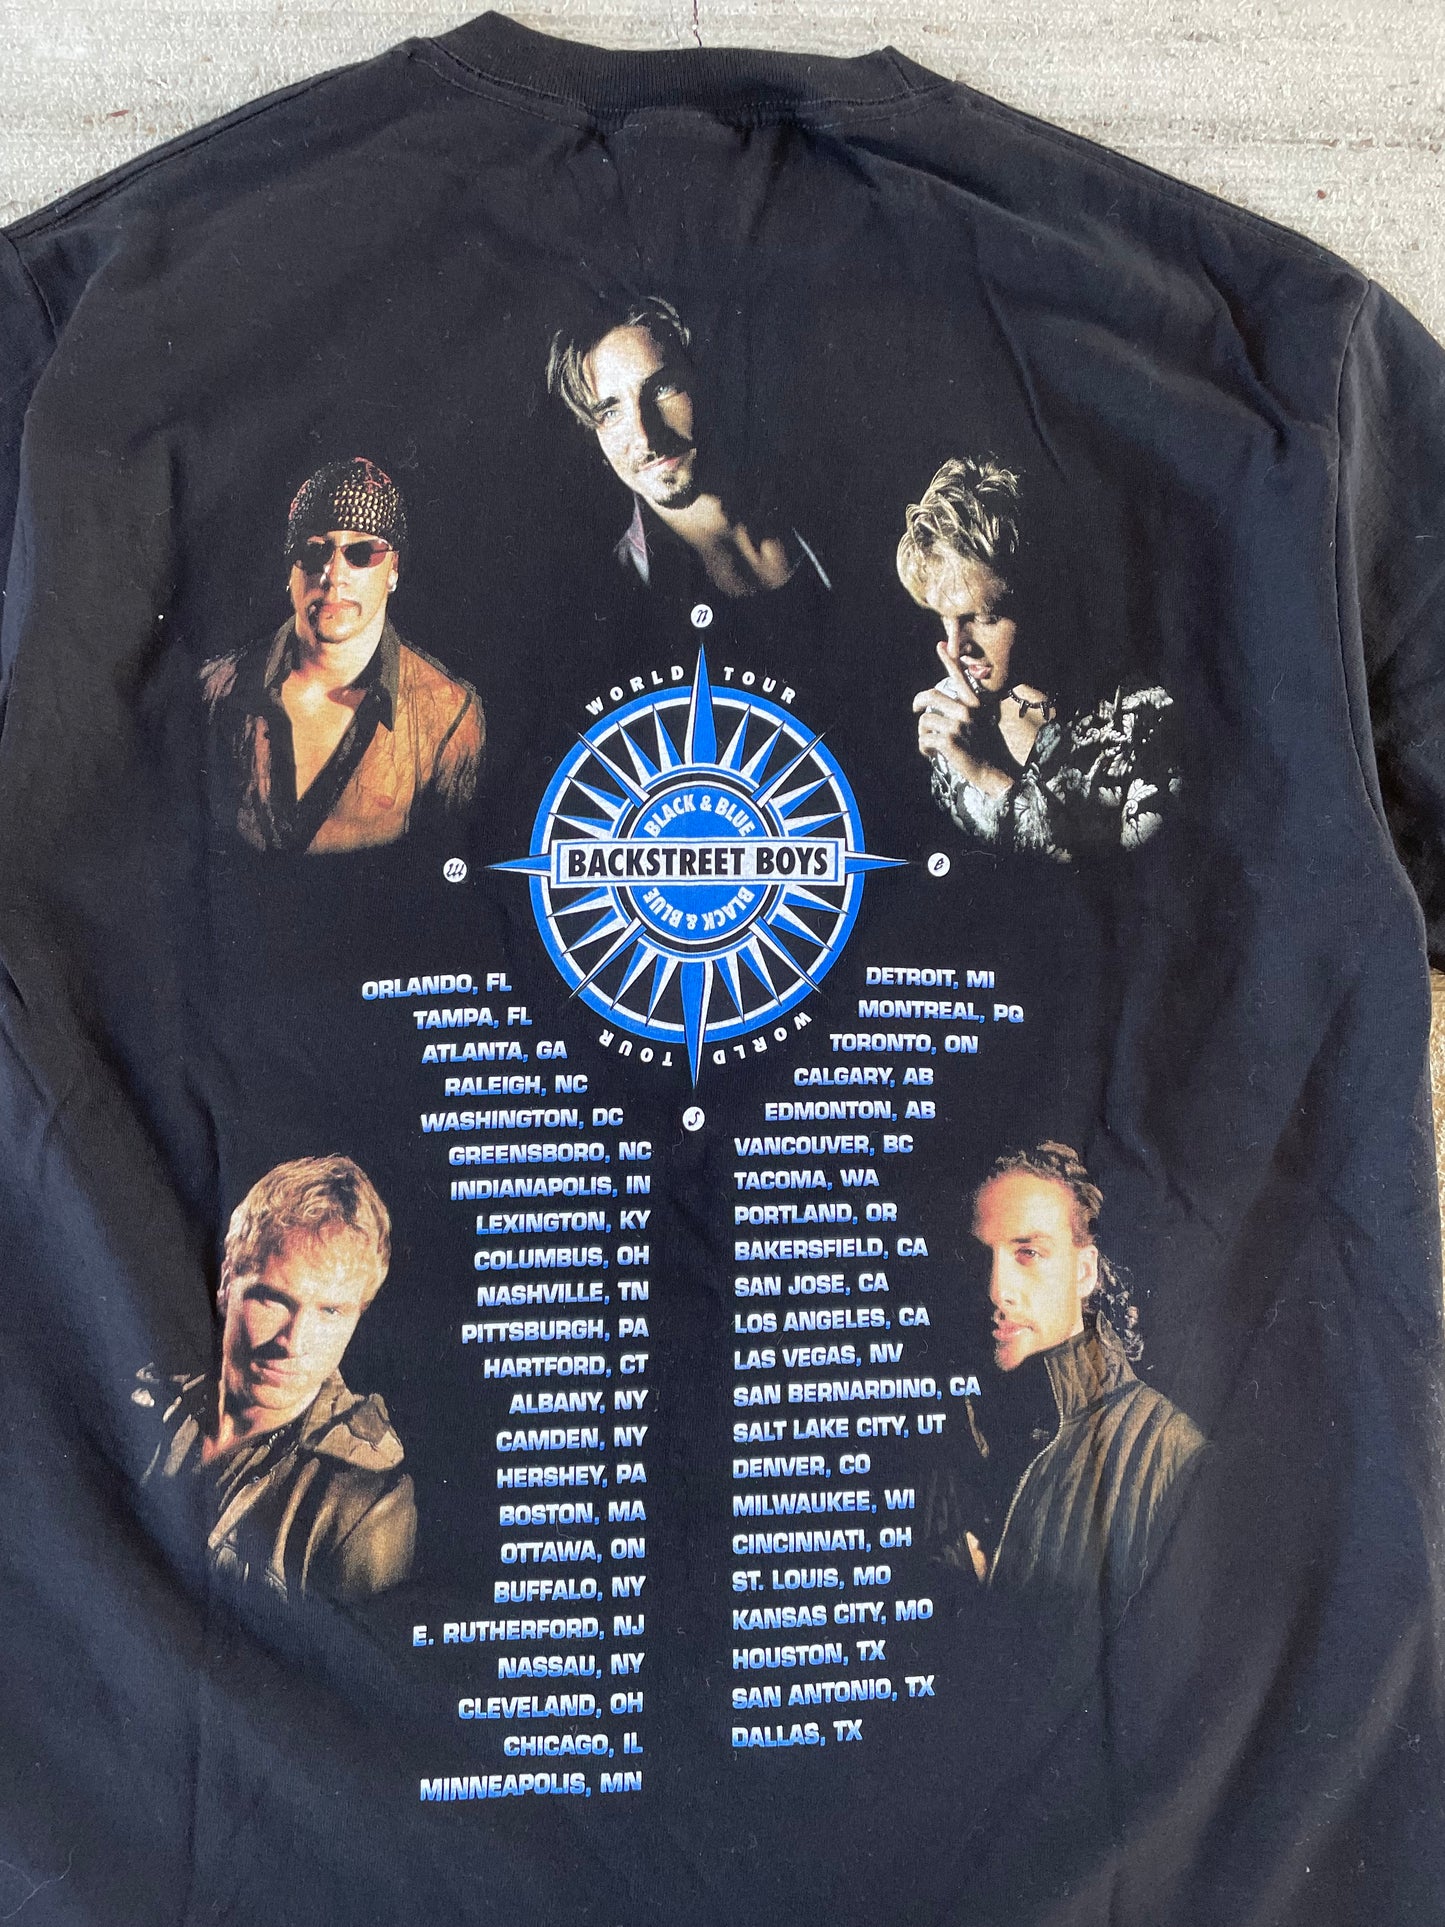 2000 Backstreet Boys Tour tee